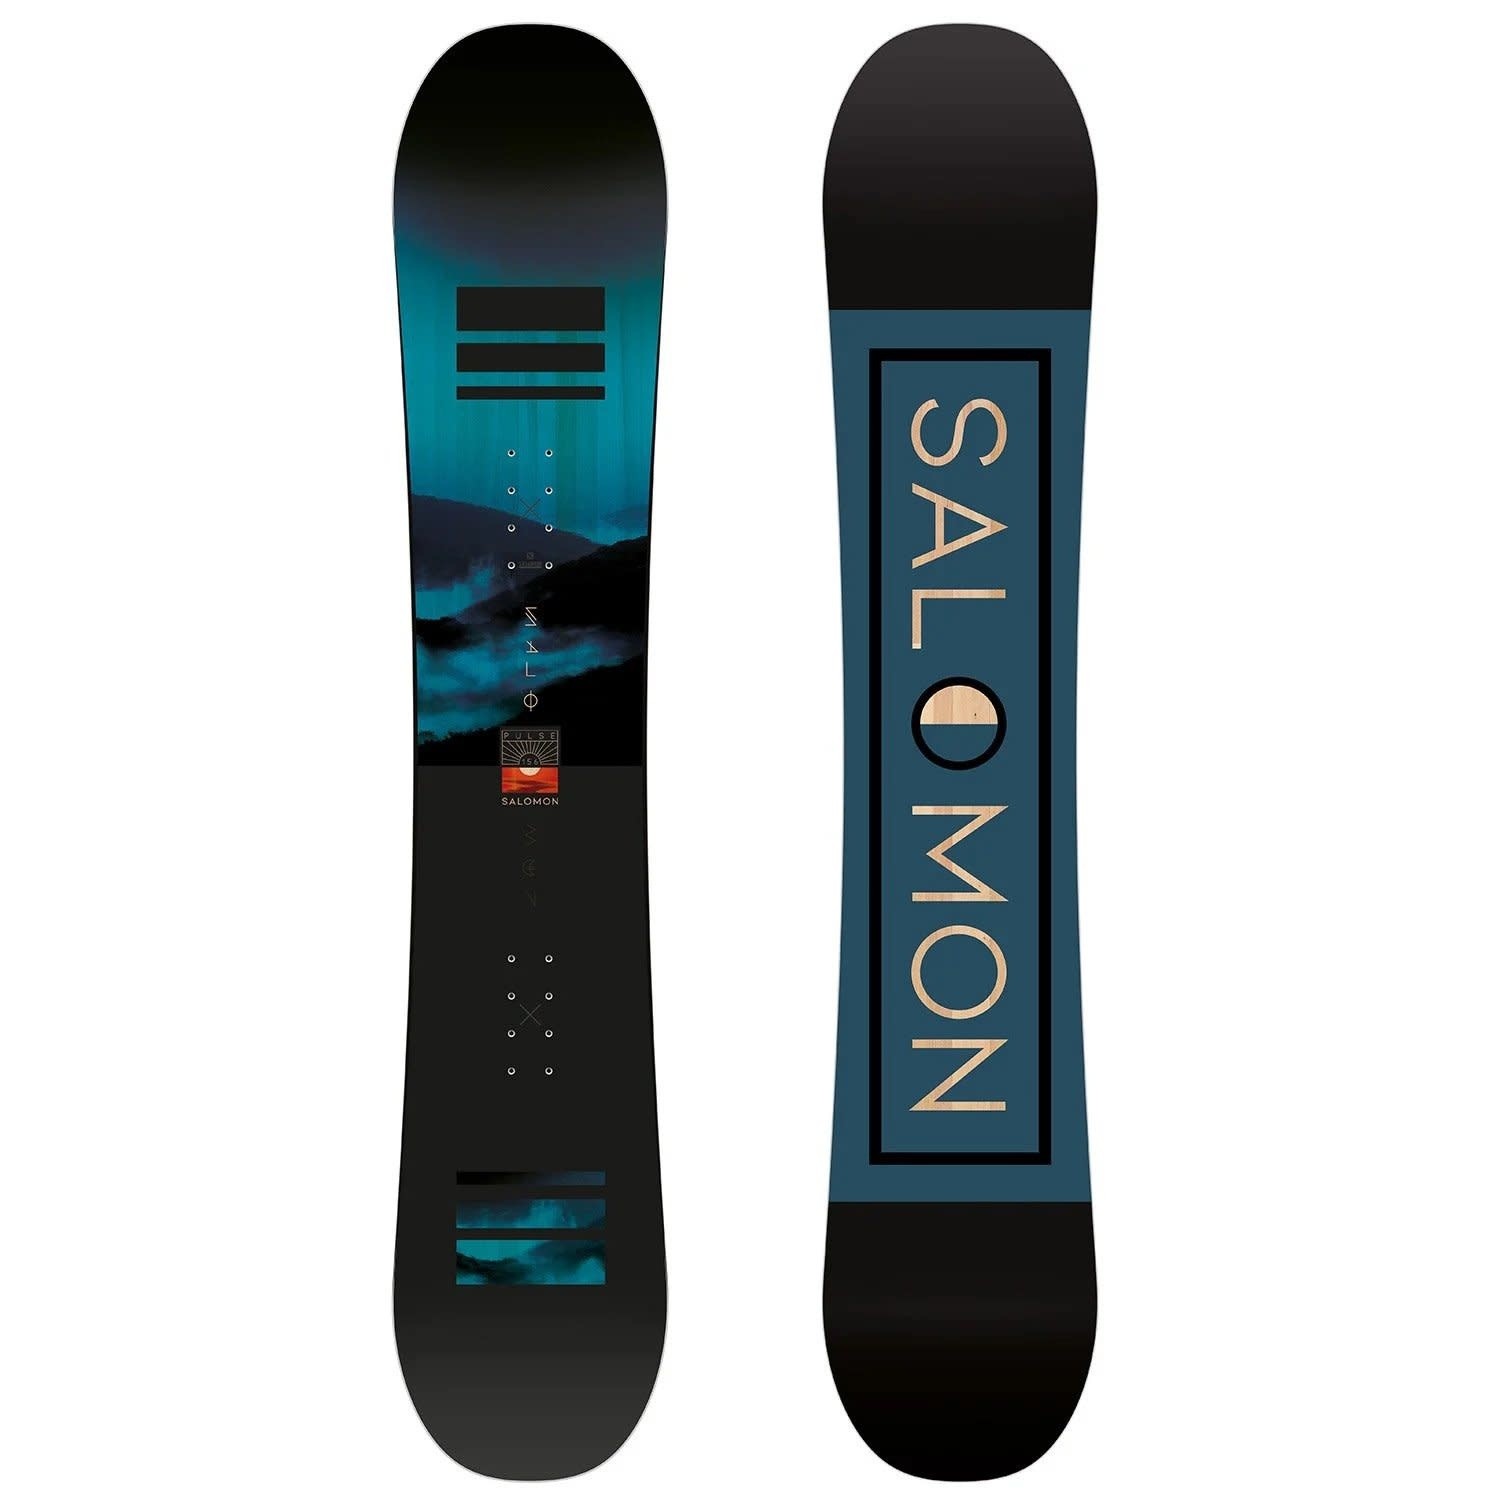 salomon sight snowboard package